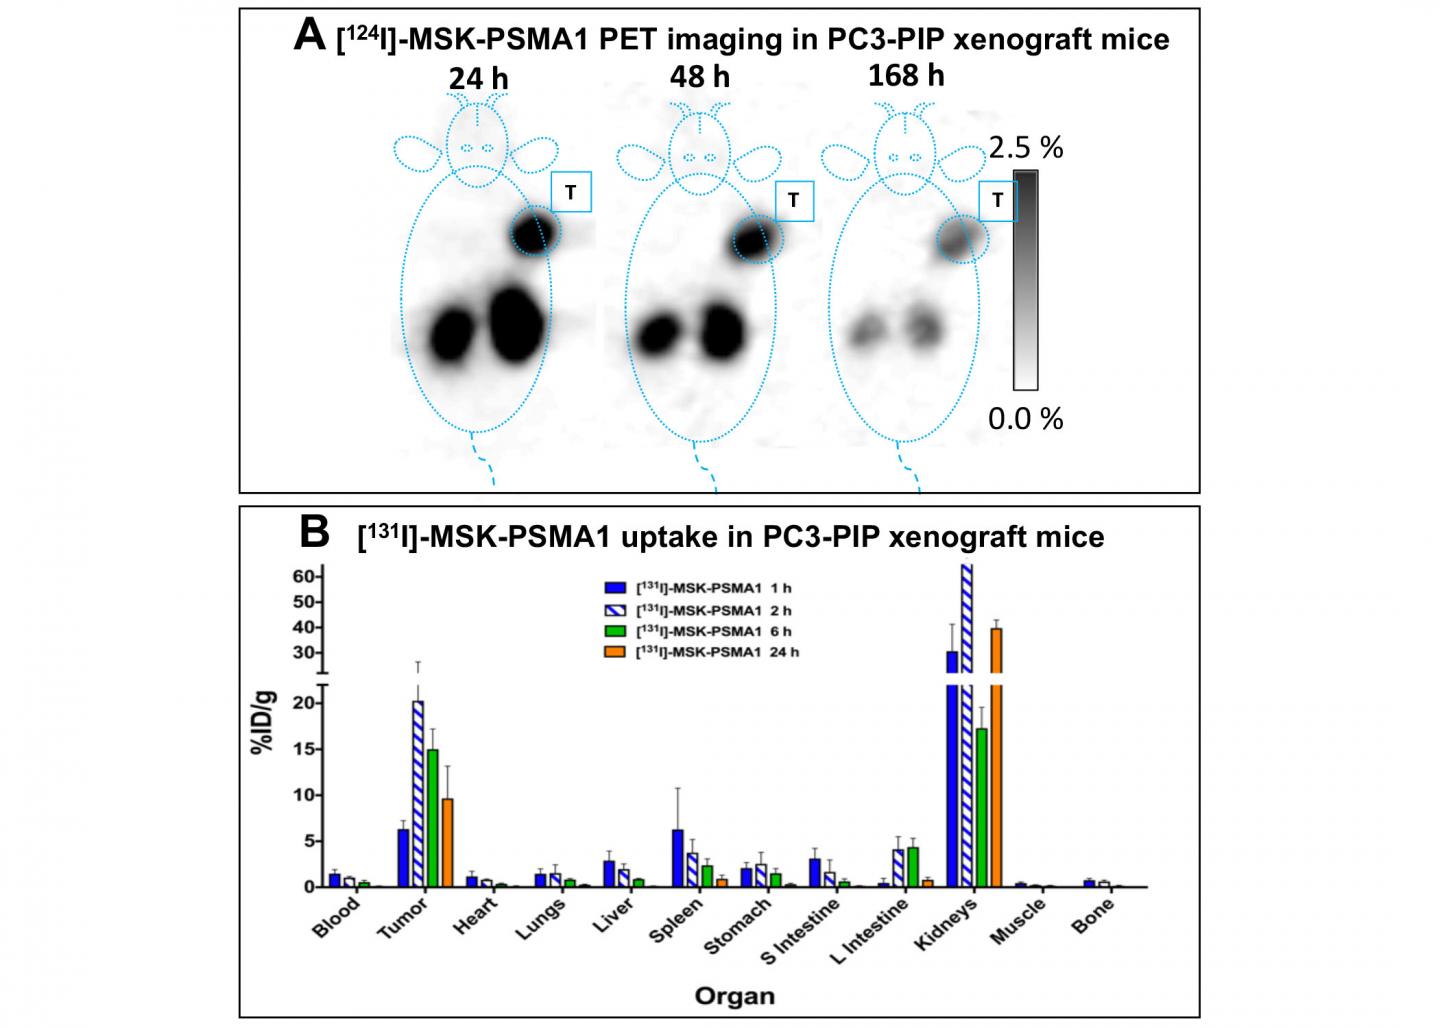 124I-MSK-PSMA1 PET Imaging and 131I-MSK-PSMA1 uptake in PC3-PIP xenograft mice